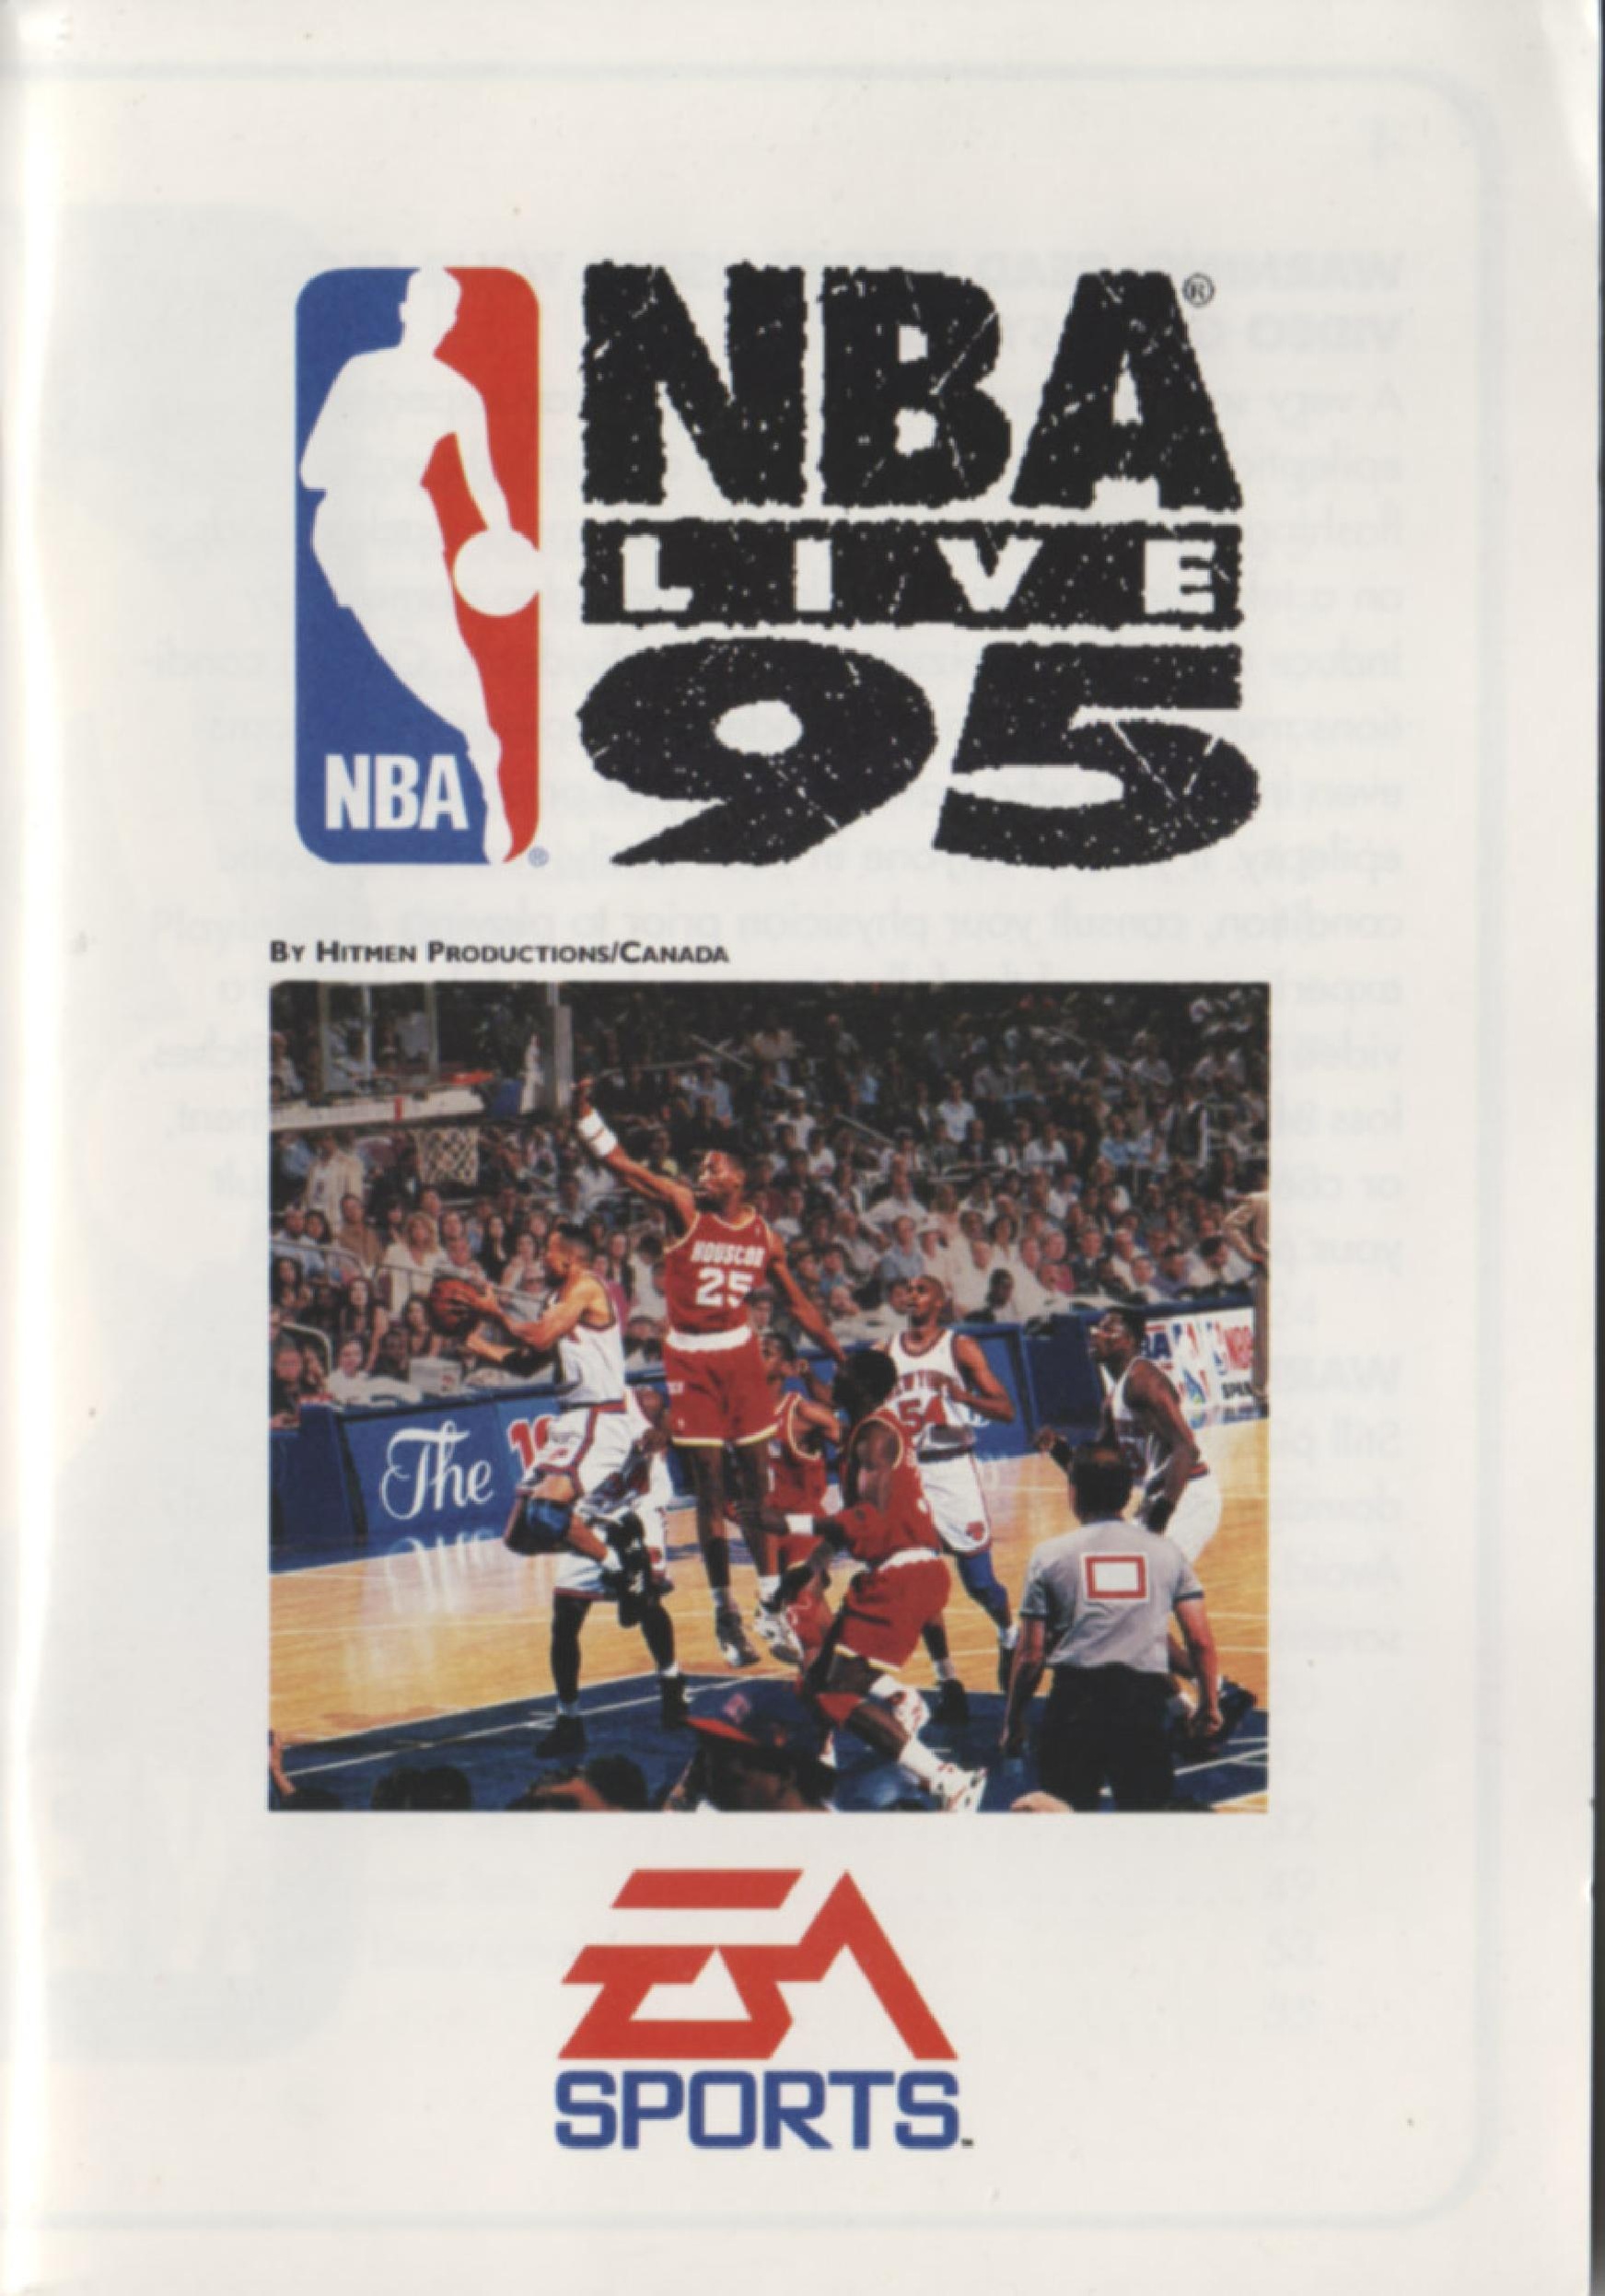 NBA Live 95 MD US Manual.pdf